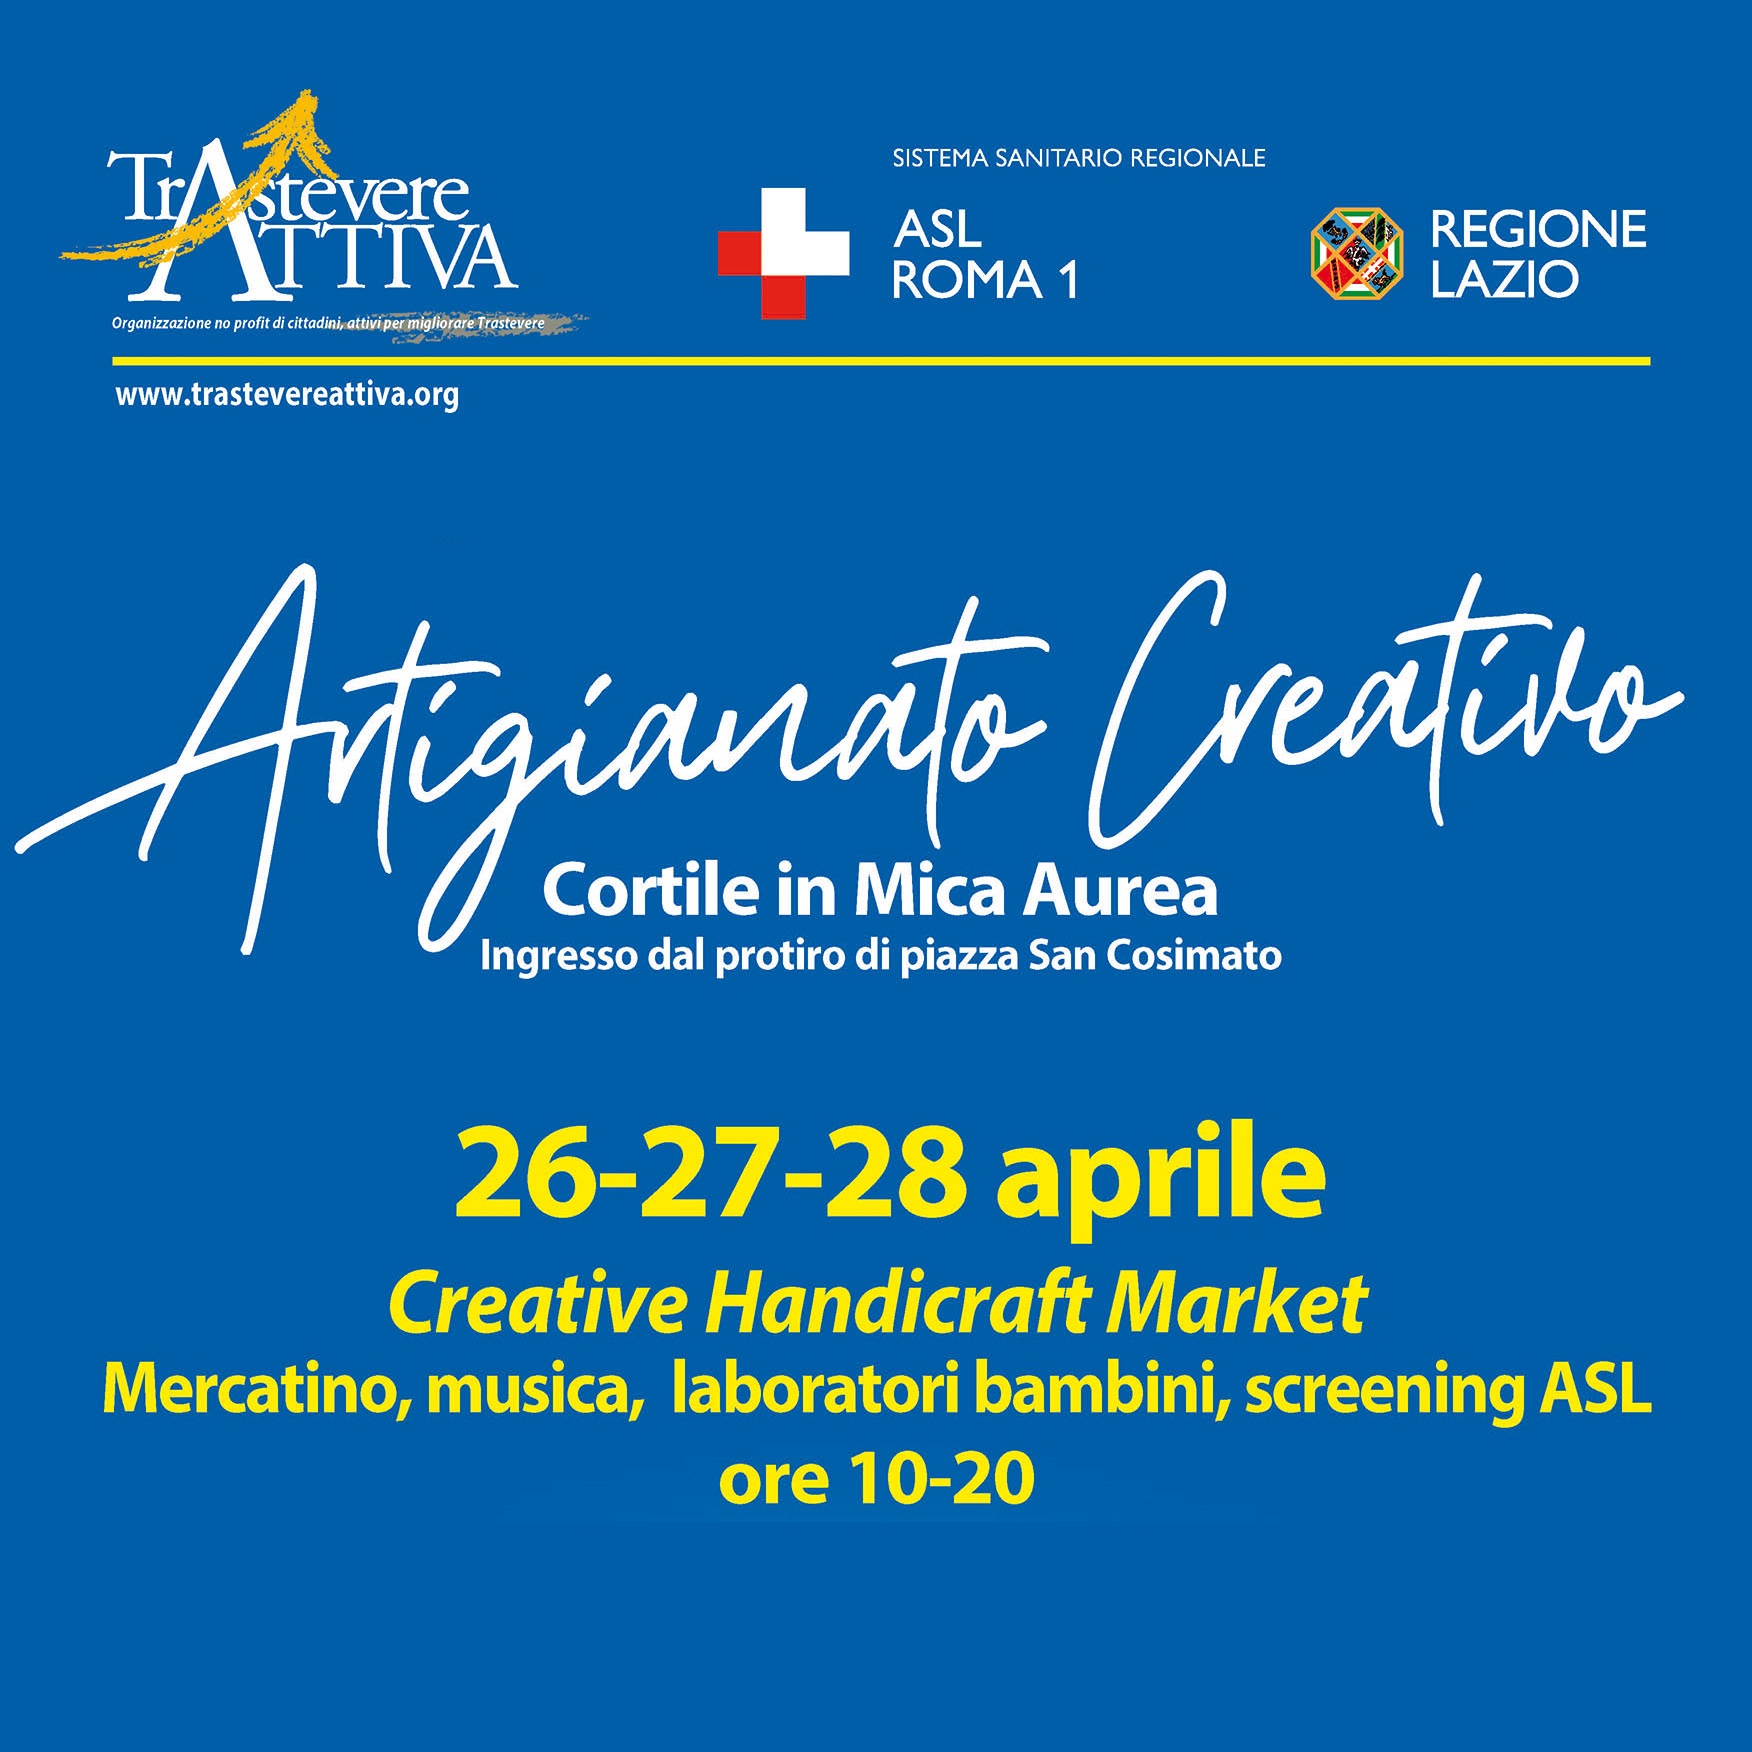 26-27-28 aprile Artigianato creativo in Mica Aurea